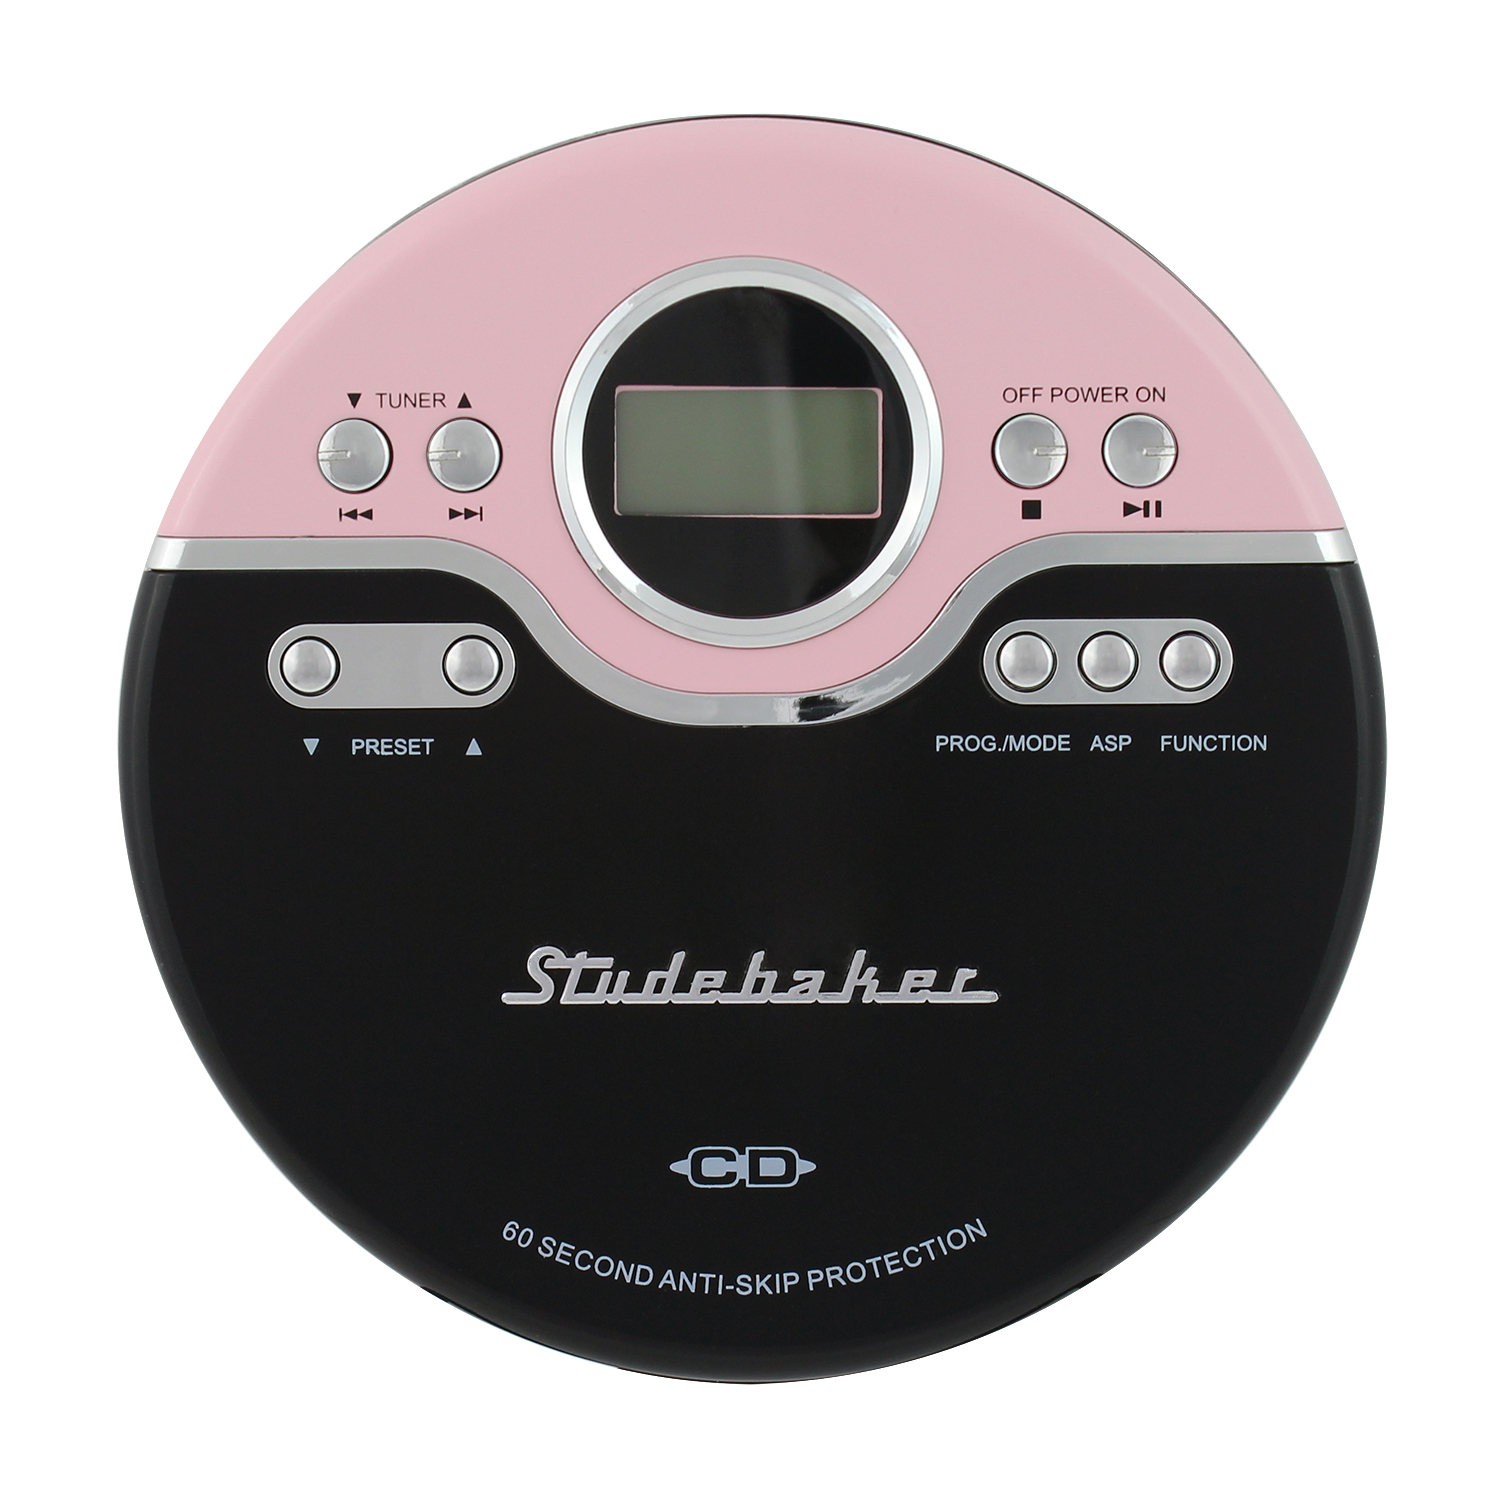 Studebaker Sb3703pb Personal Jogging Cd Player with Fm Pll Radio (Pink/Black) - image 2 of 4